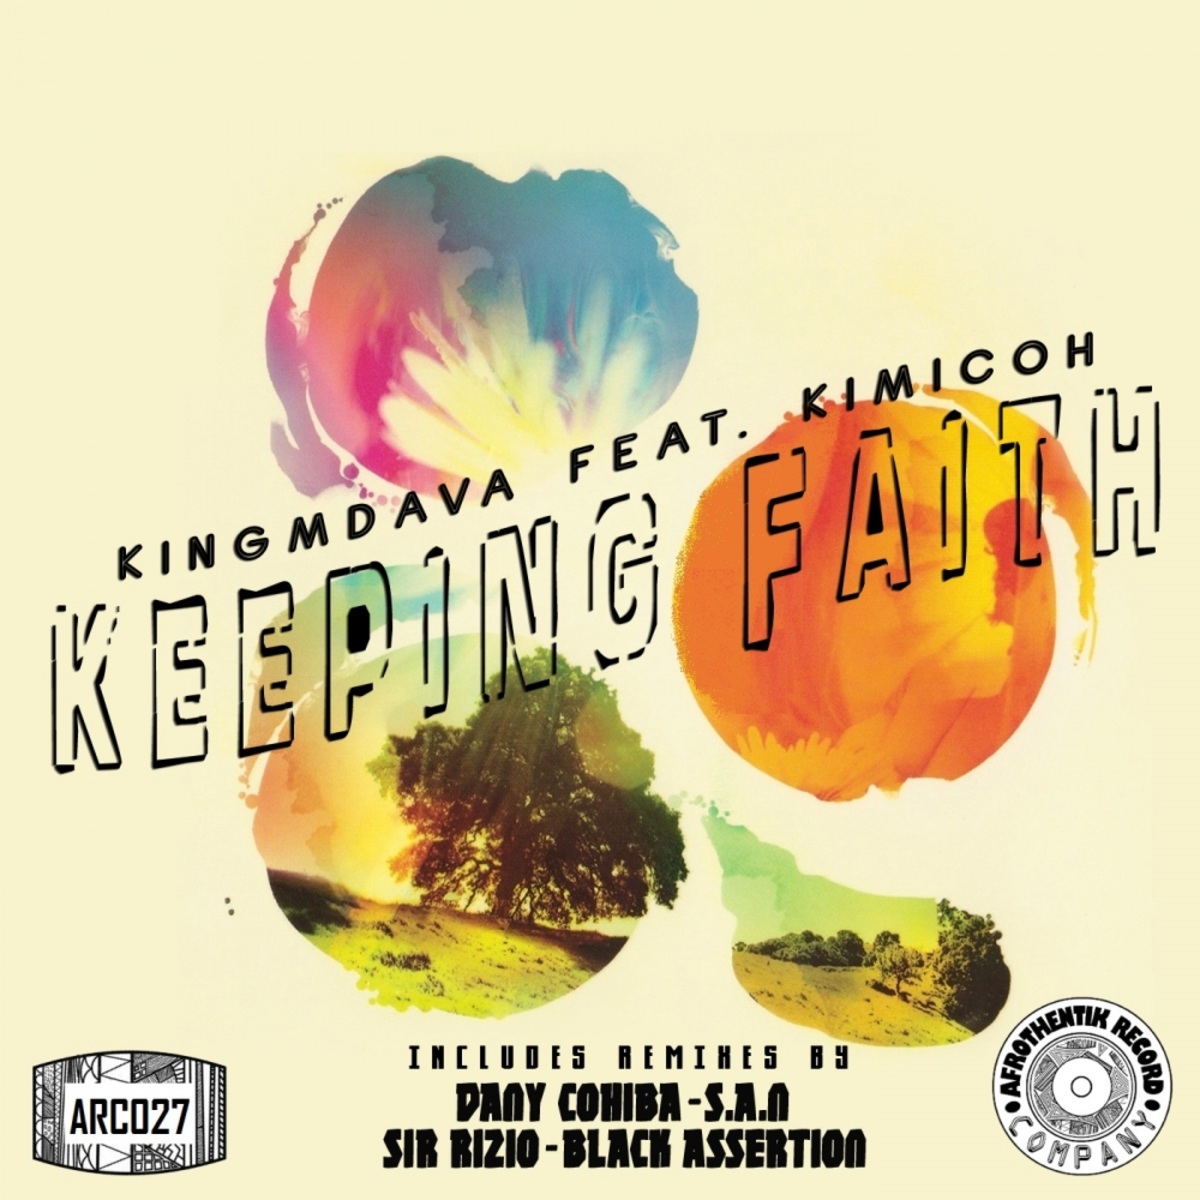 KingMdava ft Kimicoh - Keeping Faith EP / Afrothentik Record Company